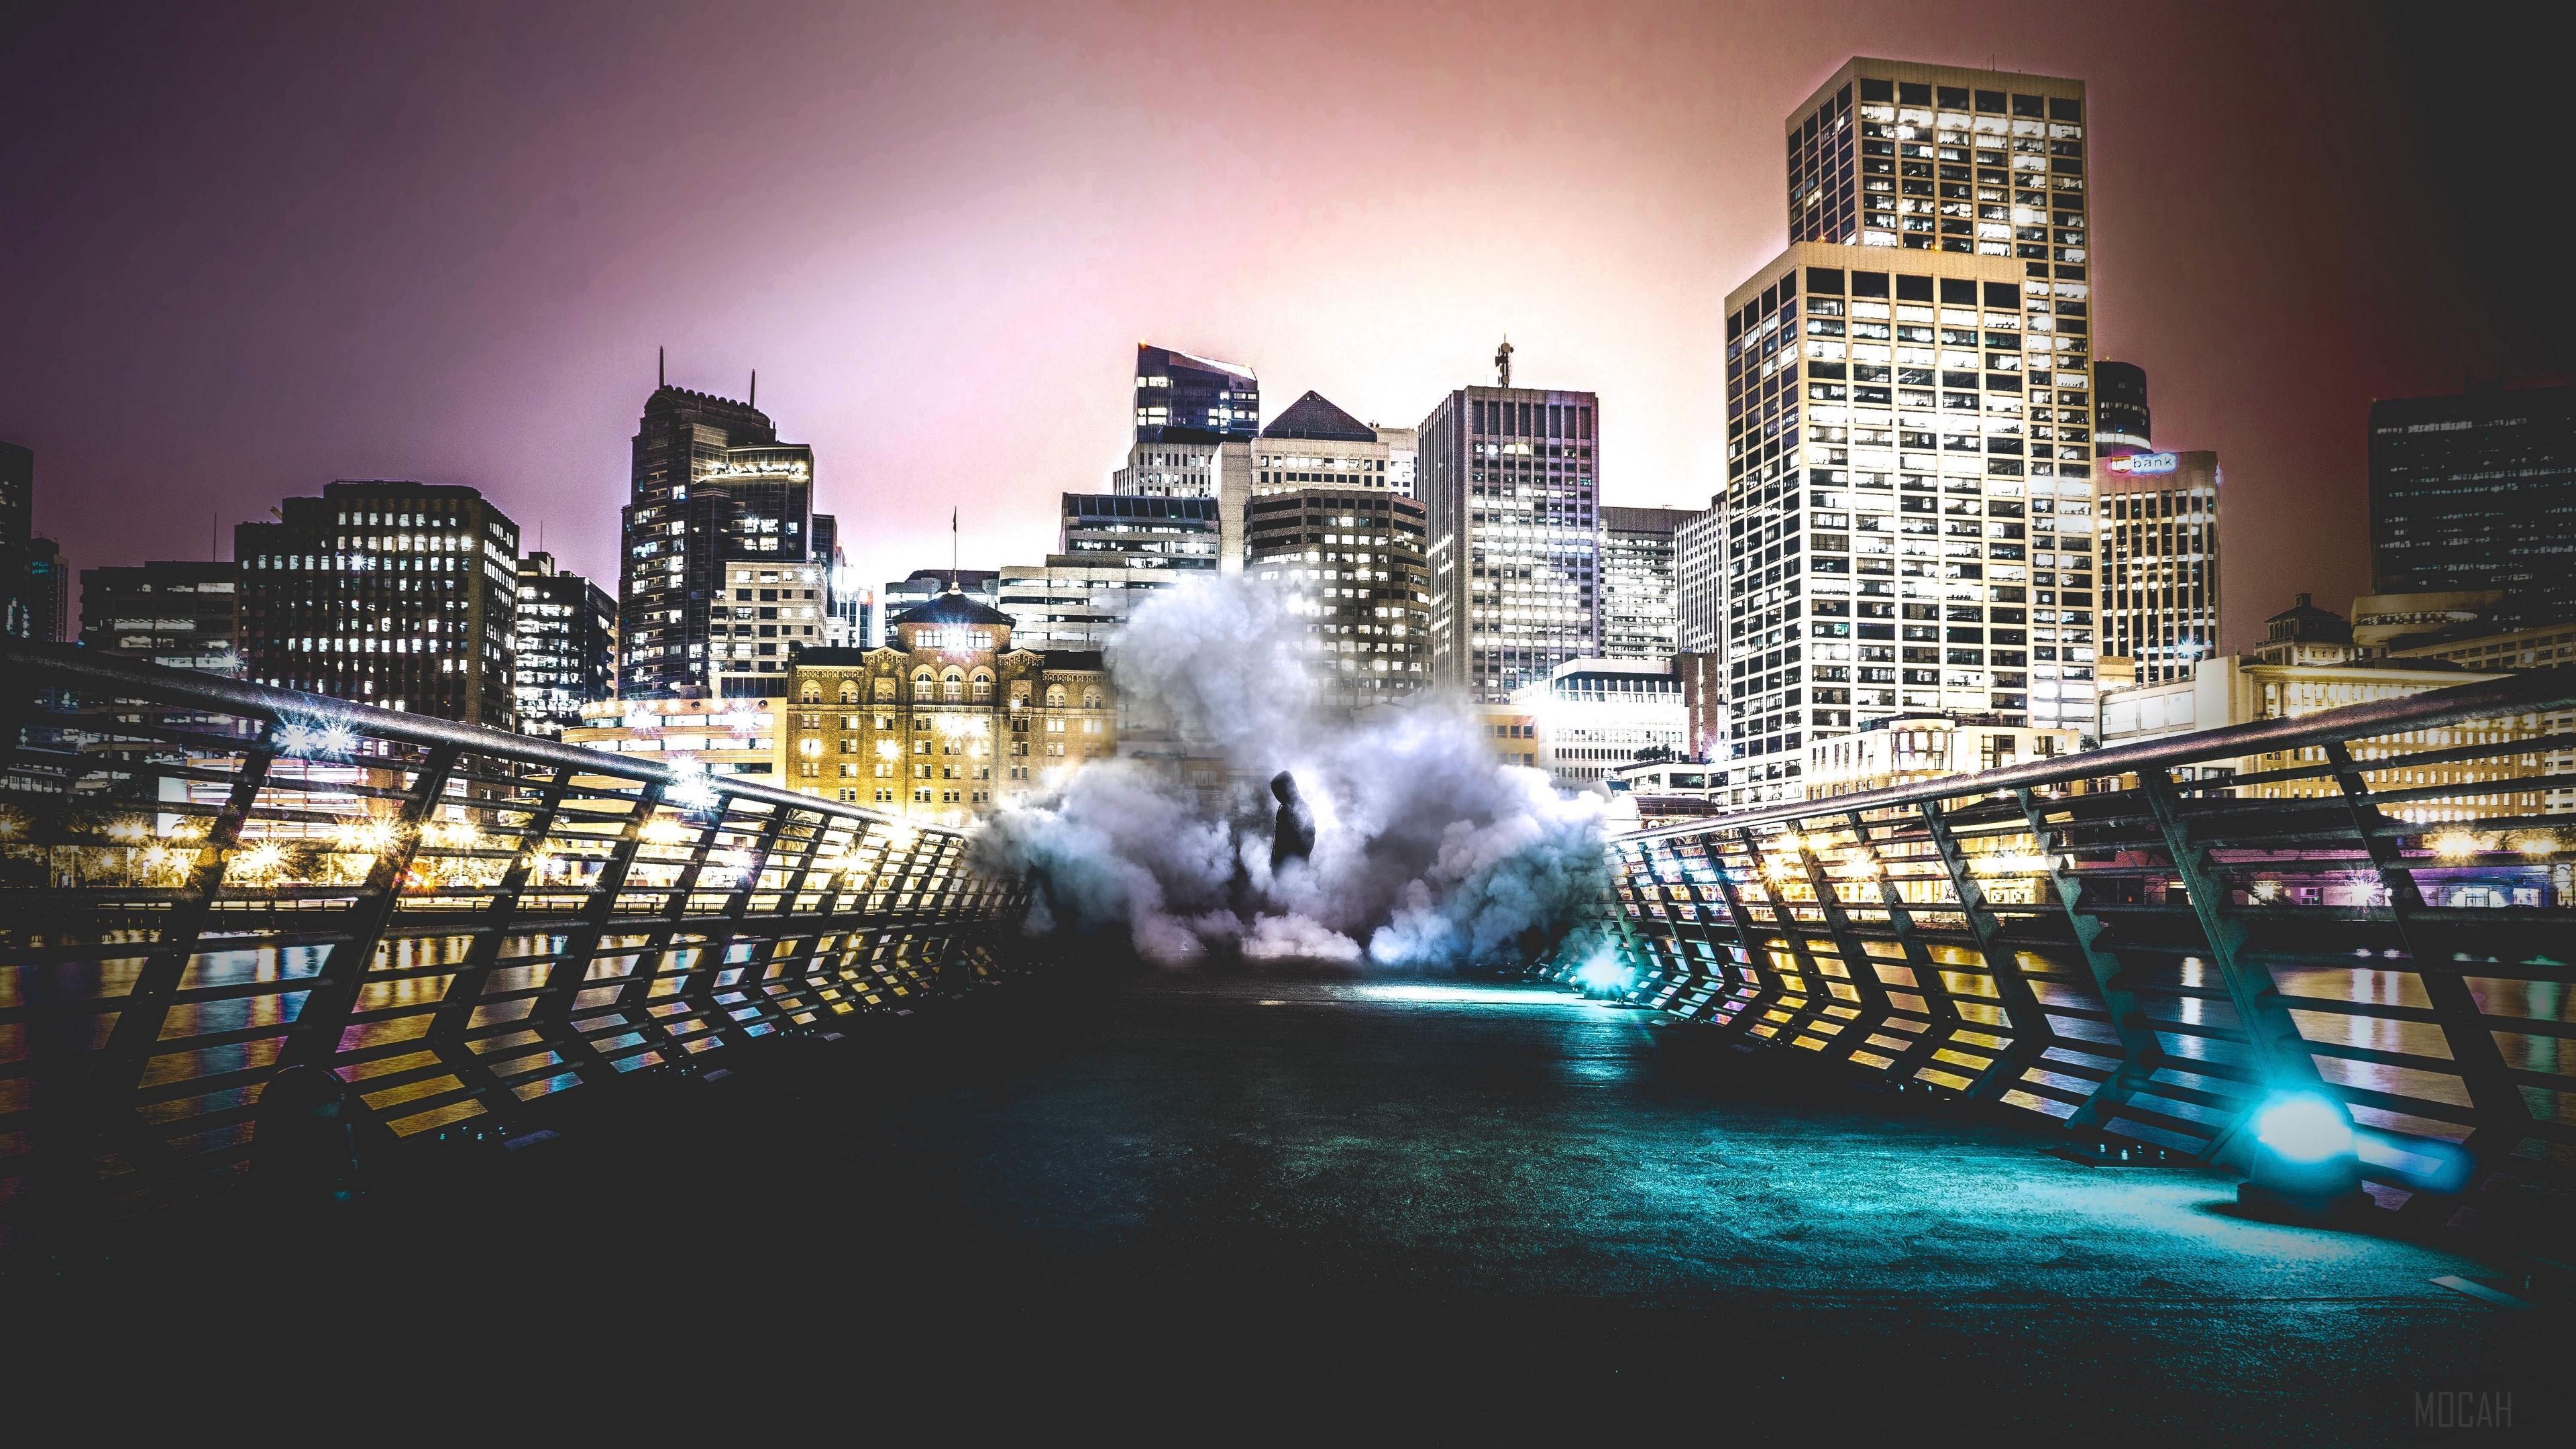 HD wallpaper, Smoke, Night, Man, Building, City, Bridge 4K